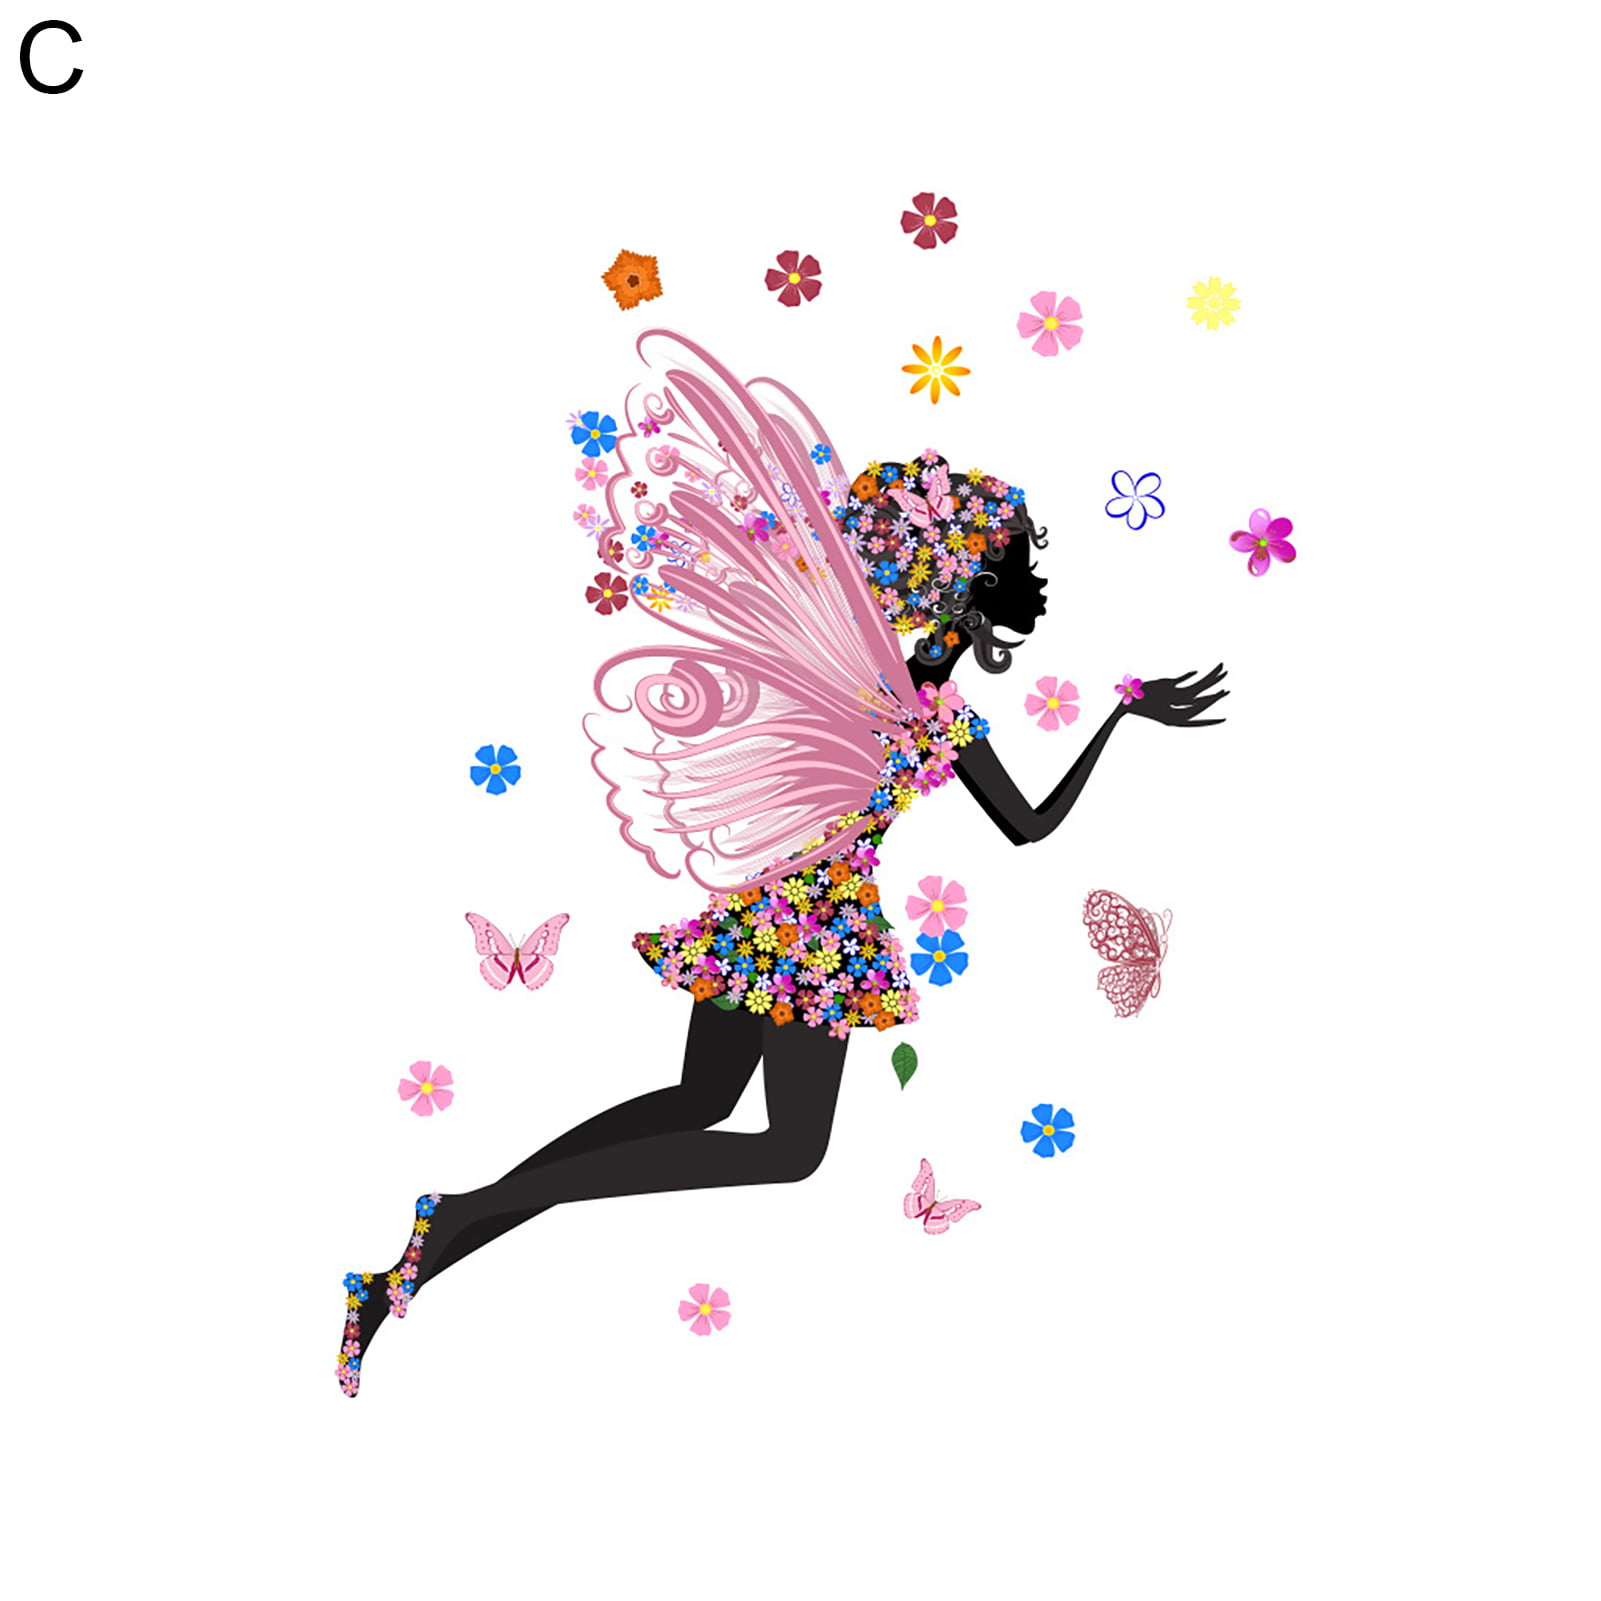 Anvazise 1 Sheet Wall Sticker Cartoon DIY Colorful Beautiful Butterfly  Ballet Girl Wall Decal Household Supplies C 